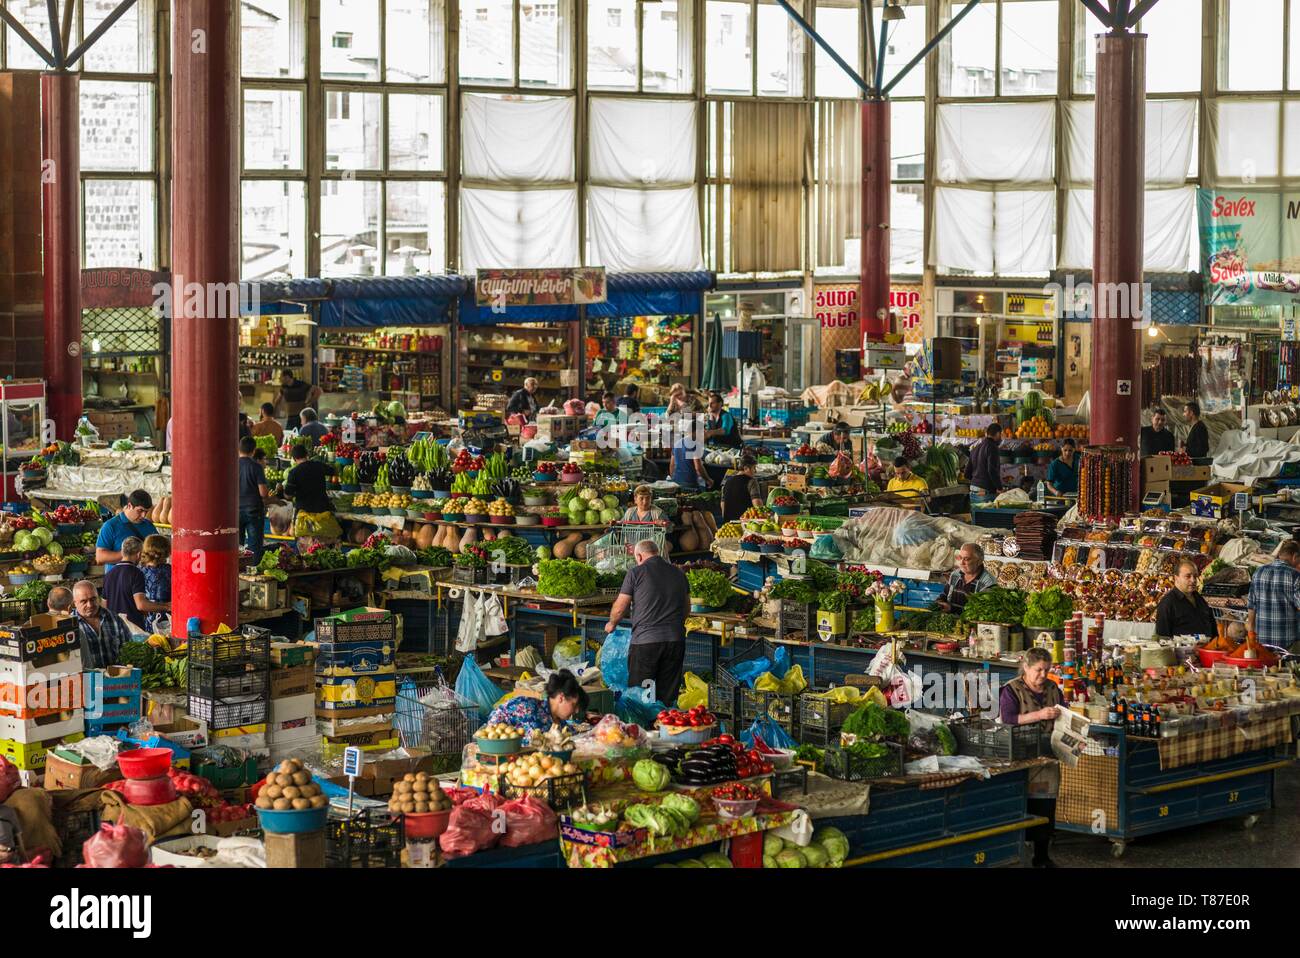 Armenia, Yerevan, G.U.M. Market, food market hall Stock Photo